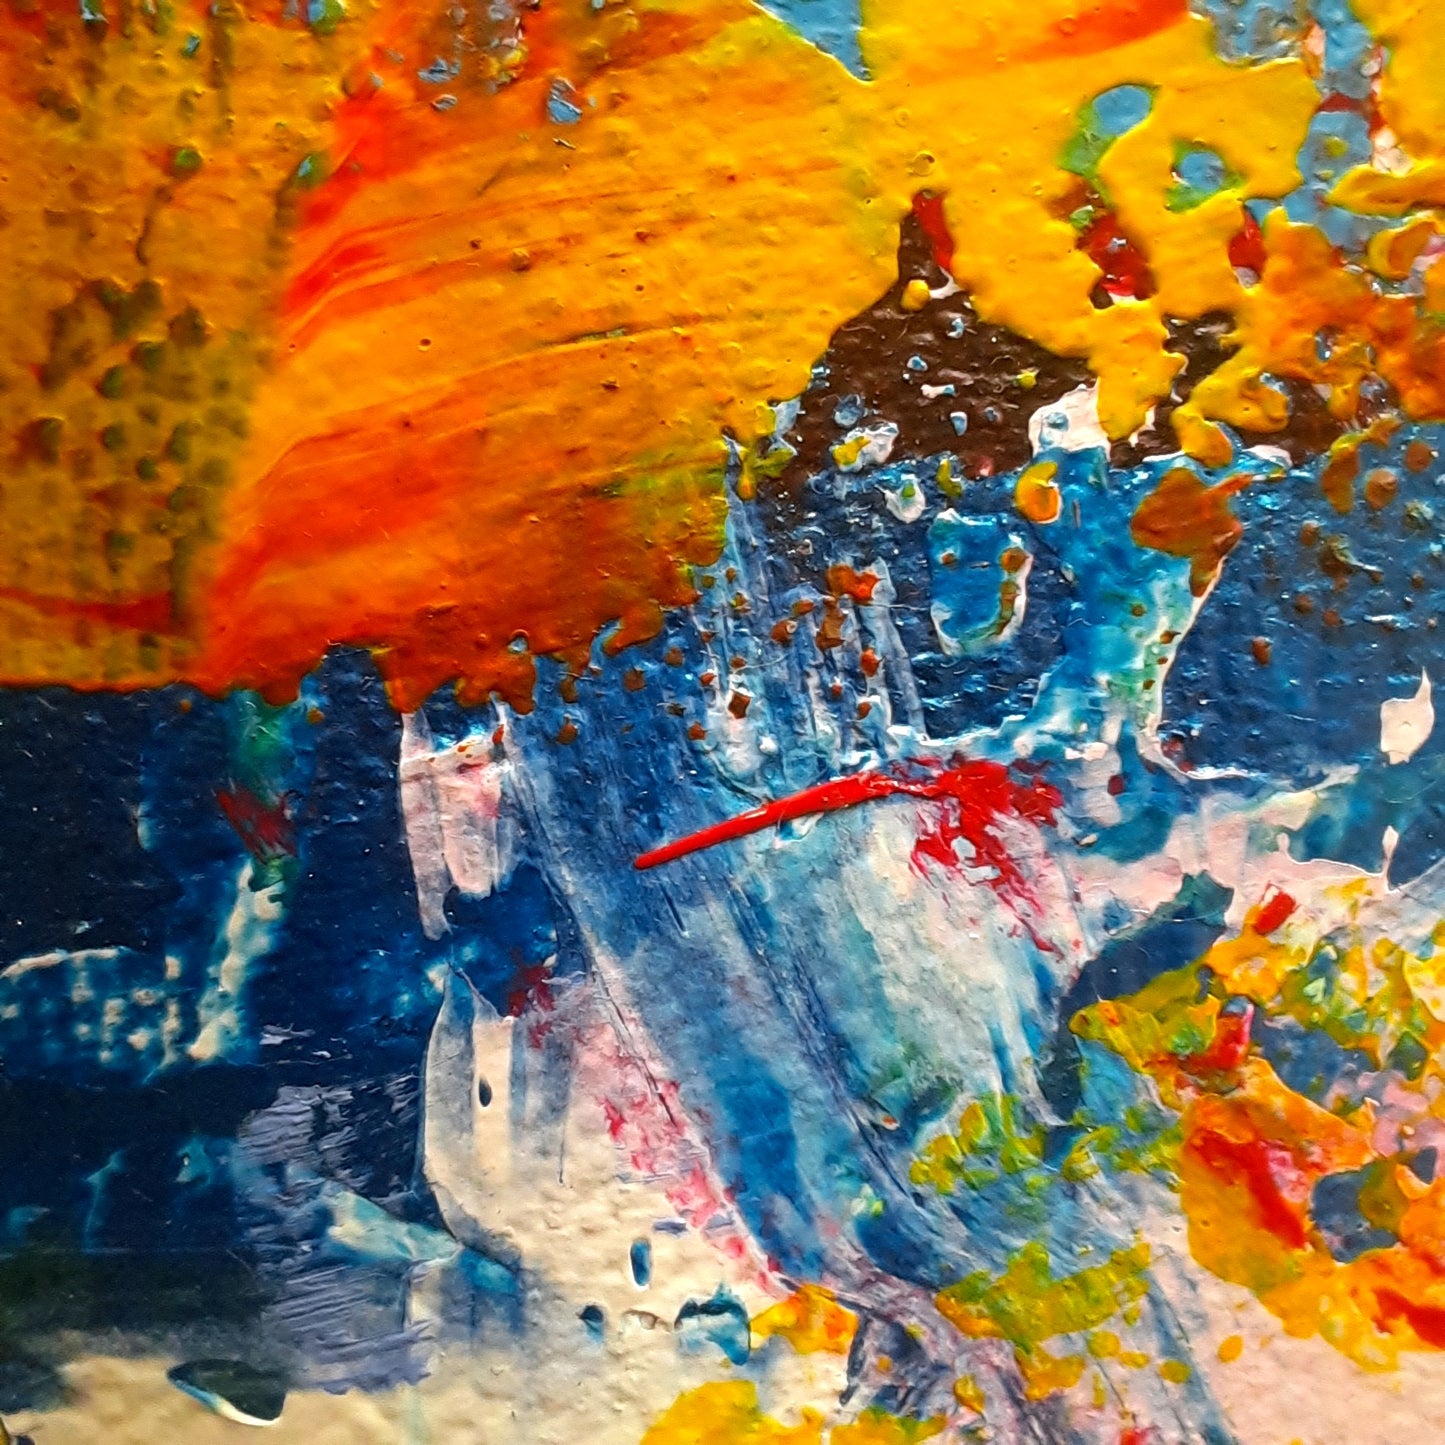 The Ocean bleeds - Abstract painting closeup